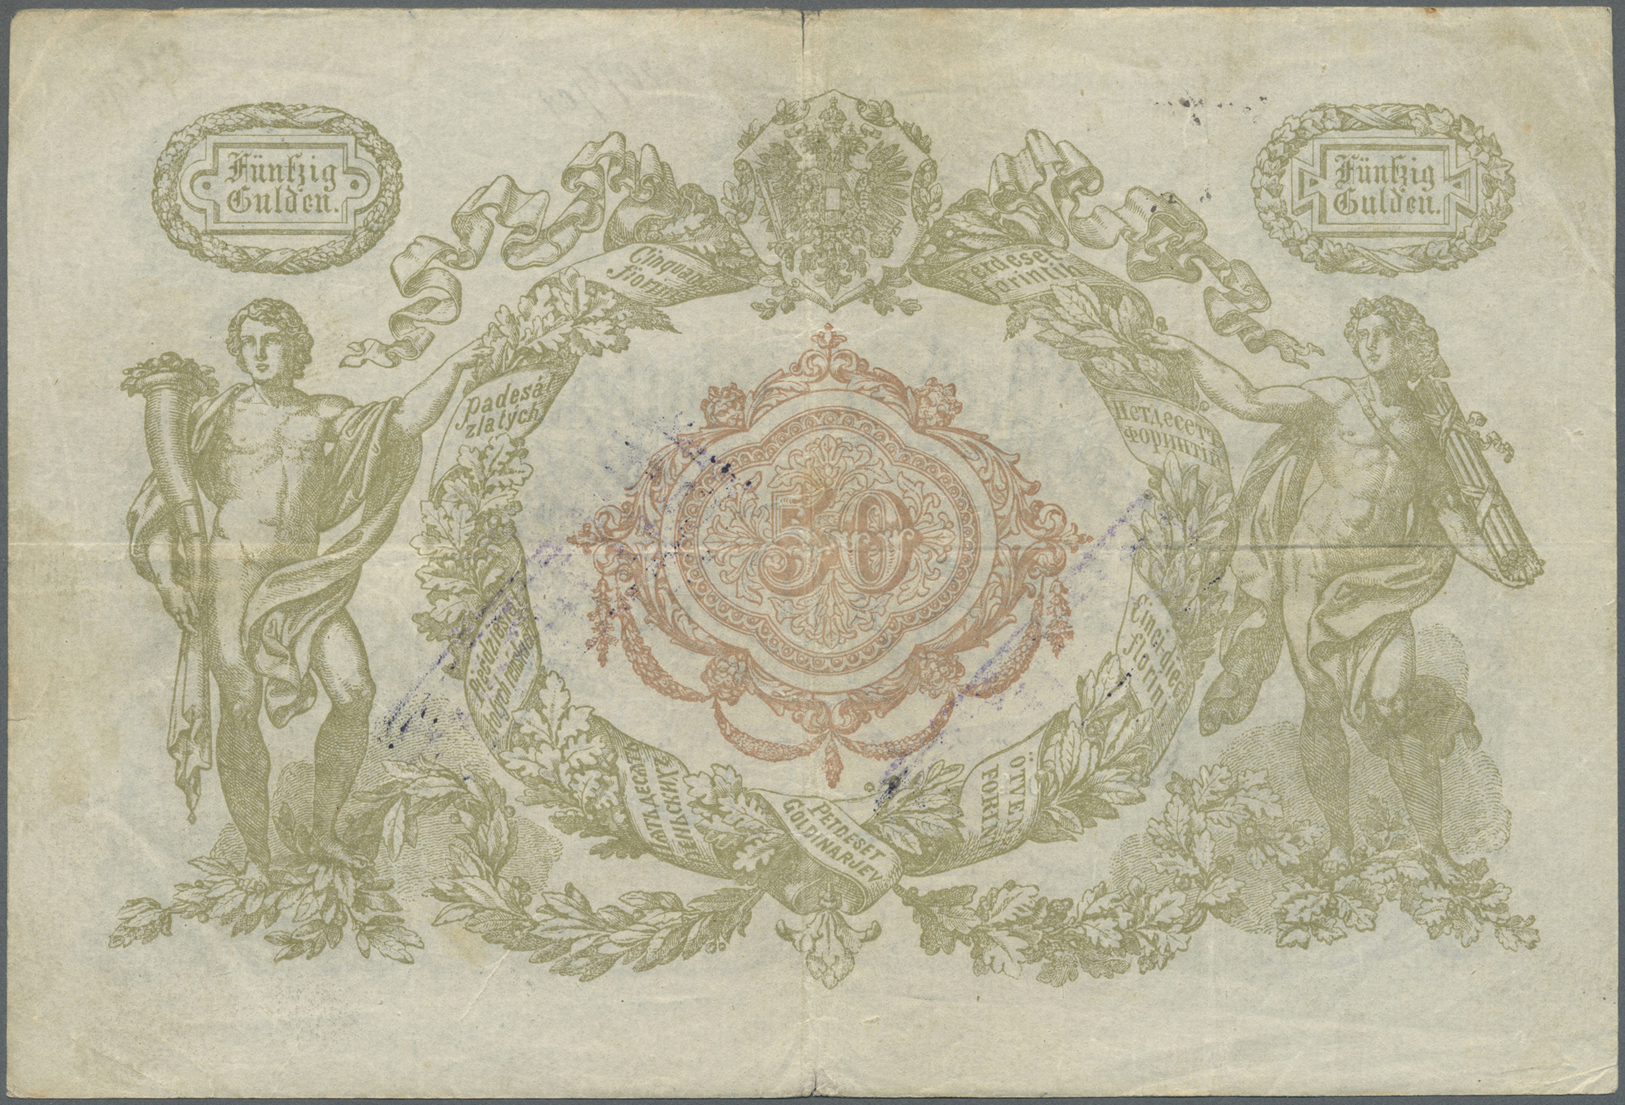 00155 Austria / Österreich:  K.u.K. Staats-Central-Casse 50 Gulden 1866, P.A152, Highly Rare And Seldom Offered Banknote - Austria